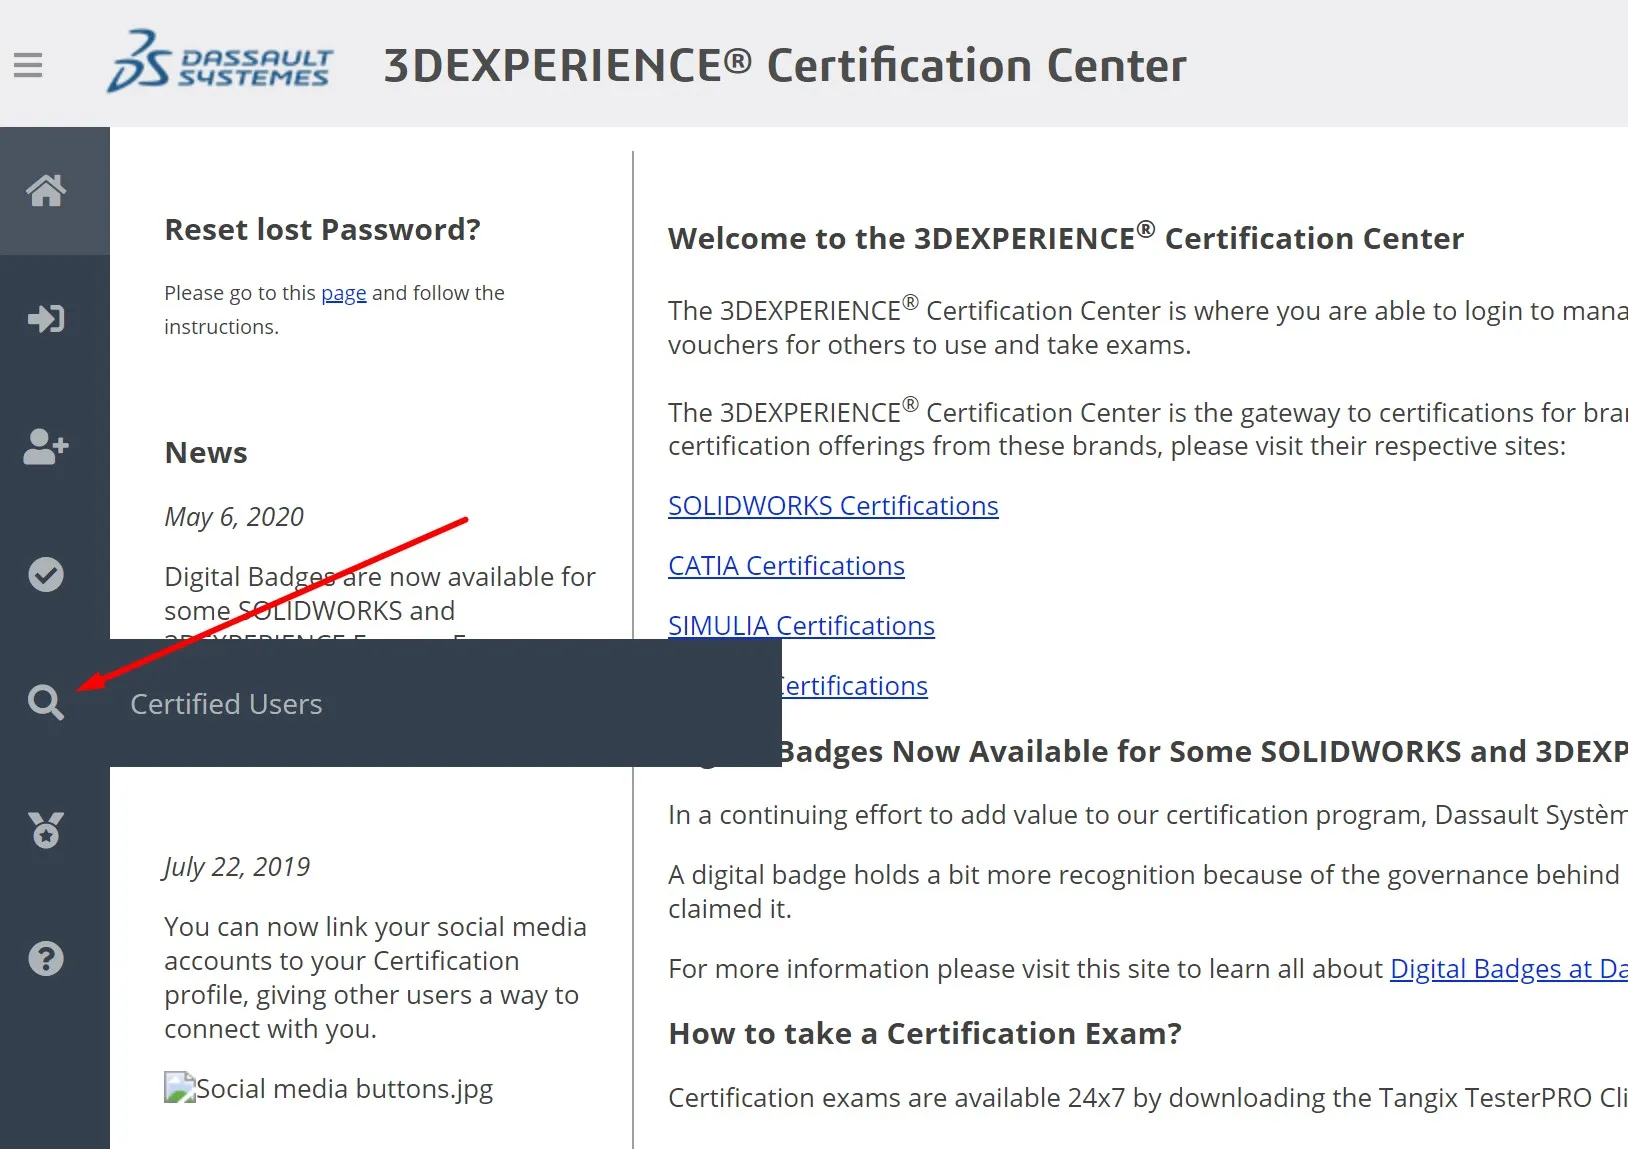 3DEXPERIENCE Certification Center